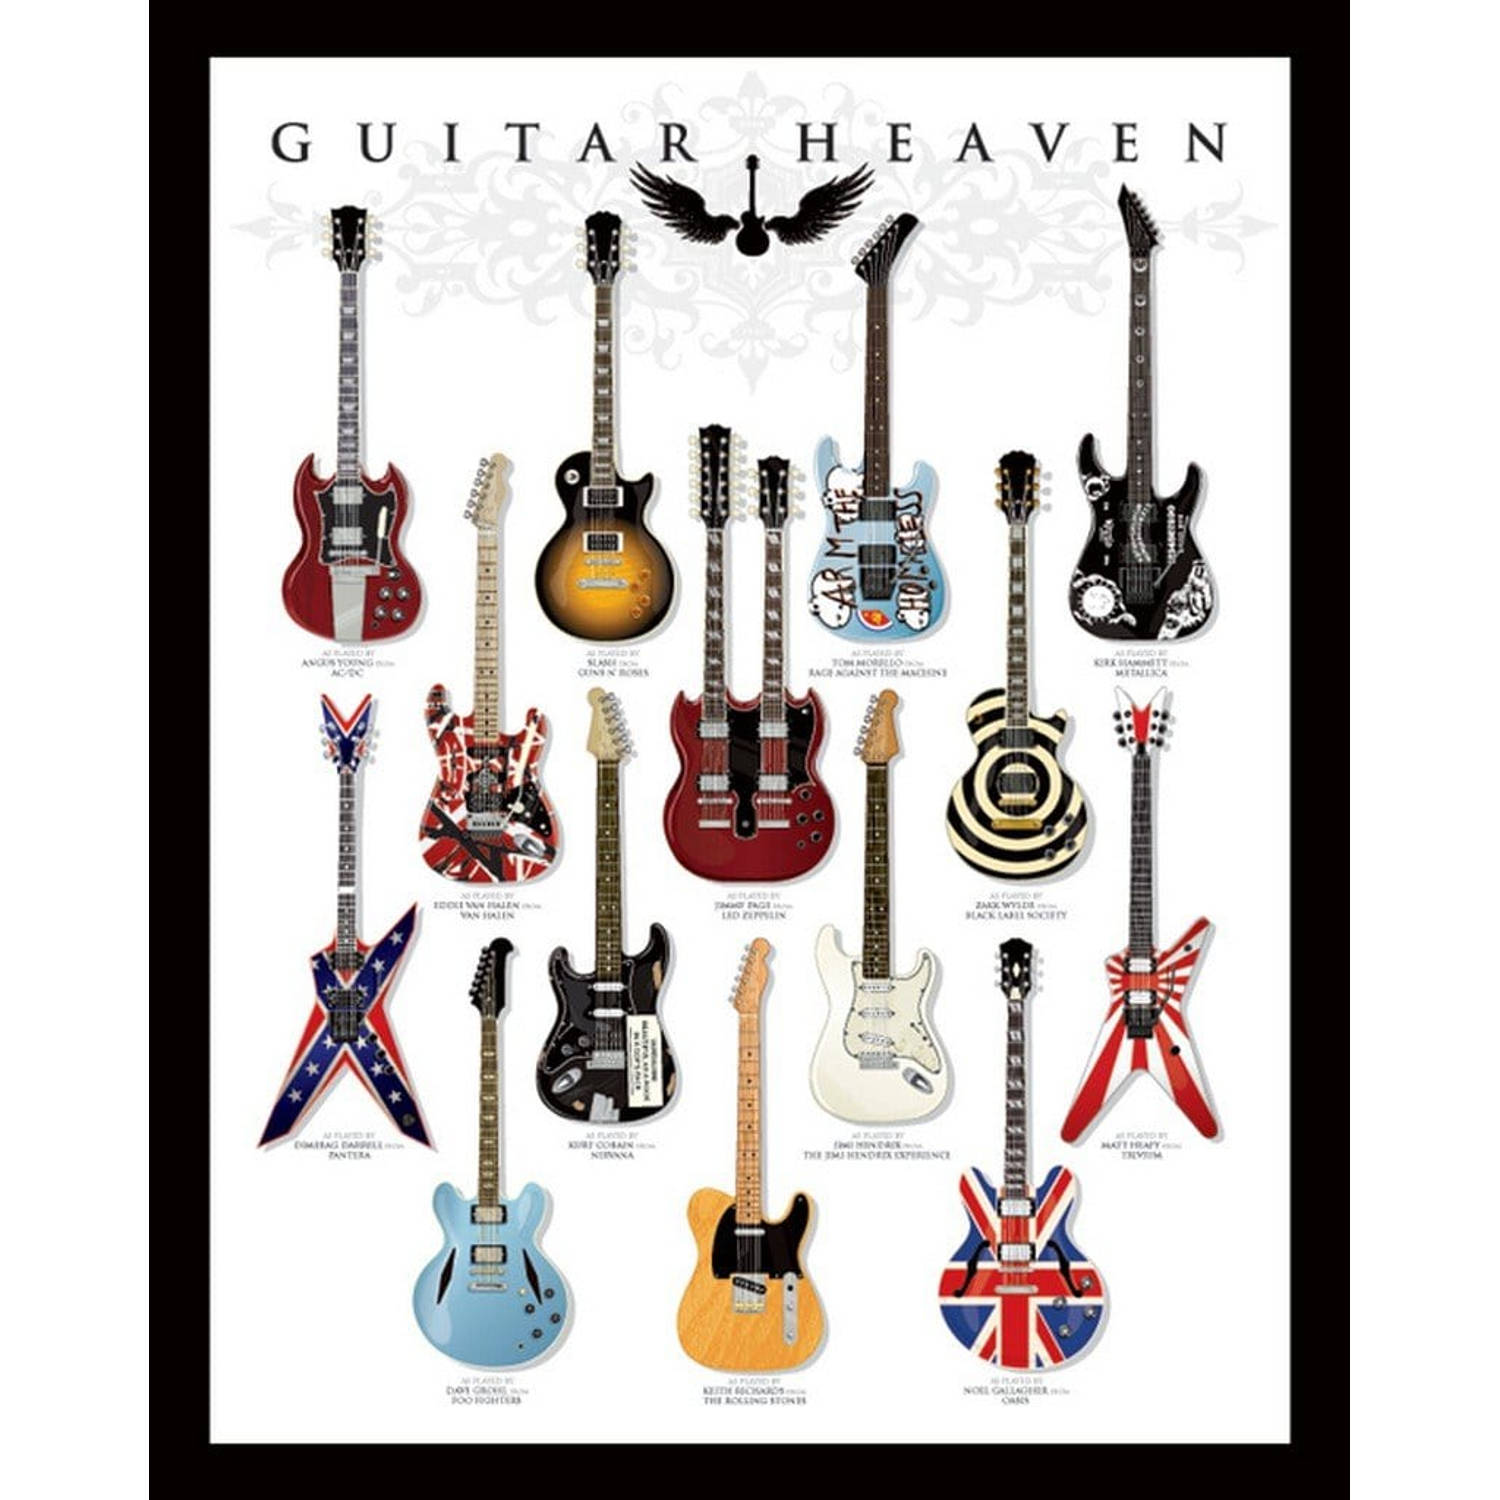 Guitar heaven